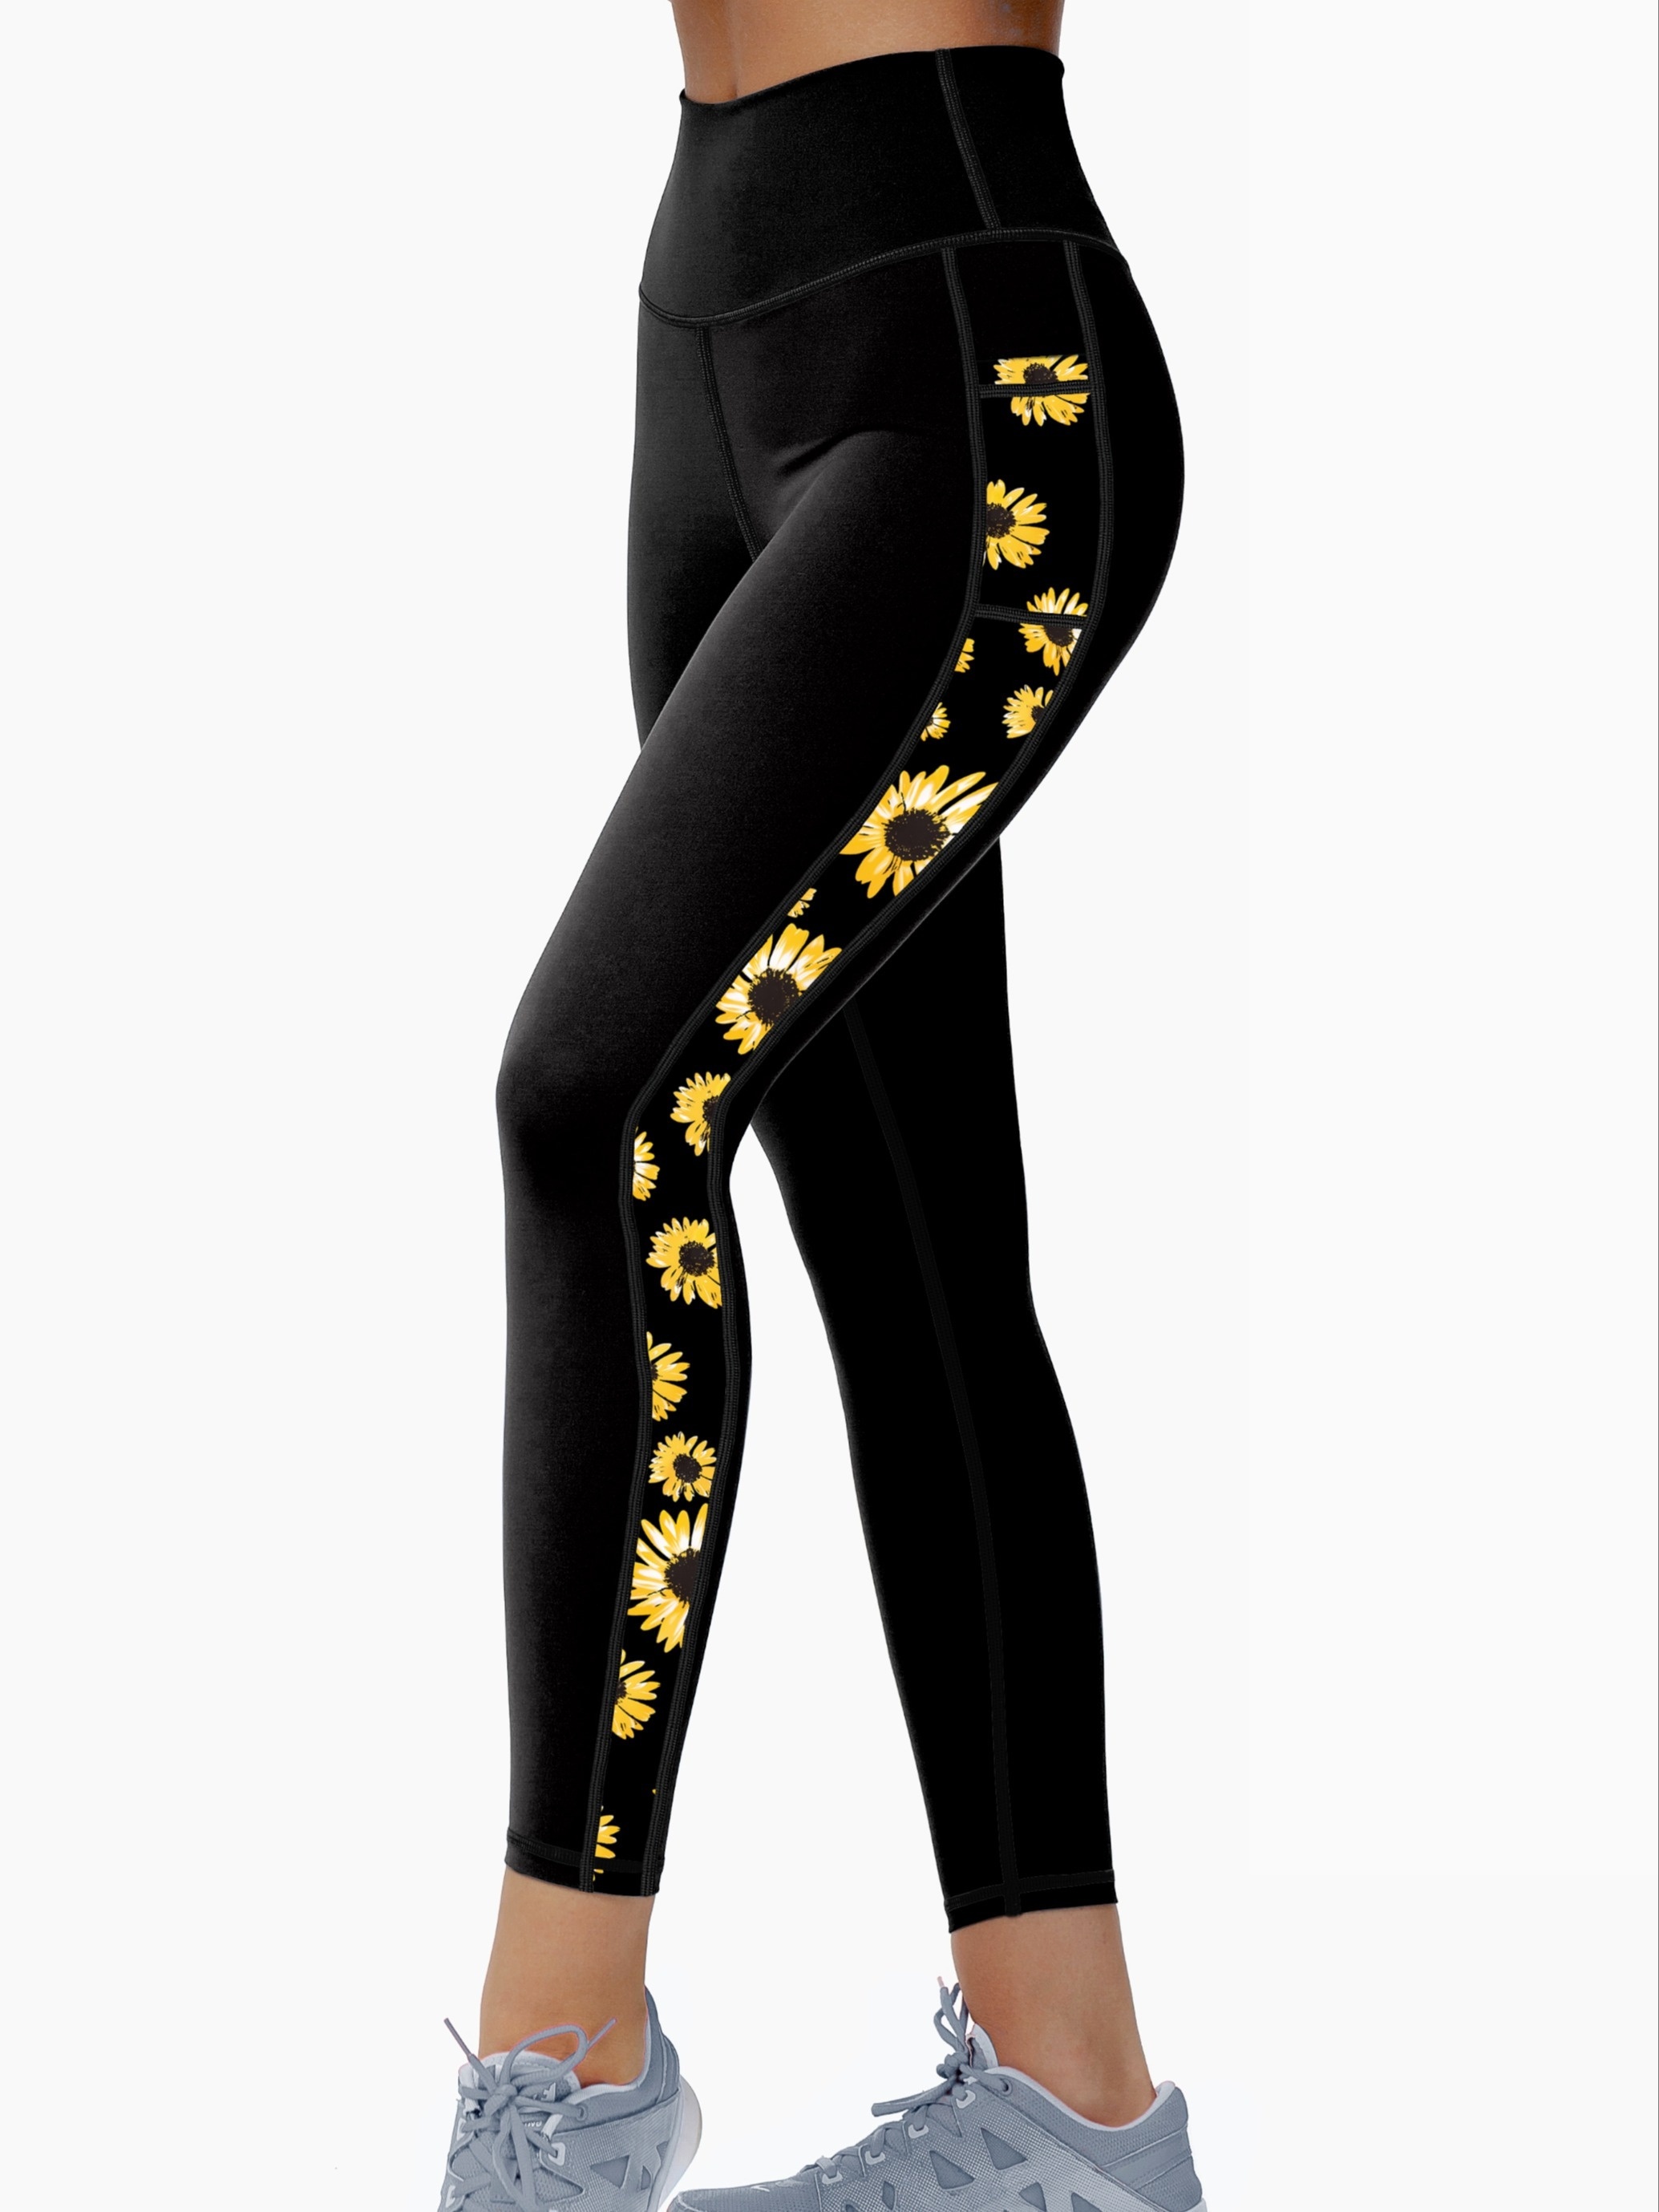 yogalicious black floral leggings - Gem